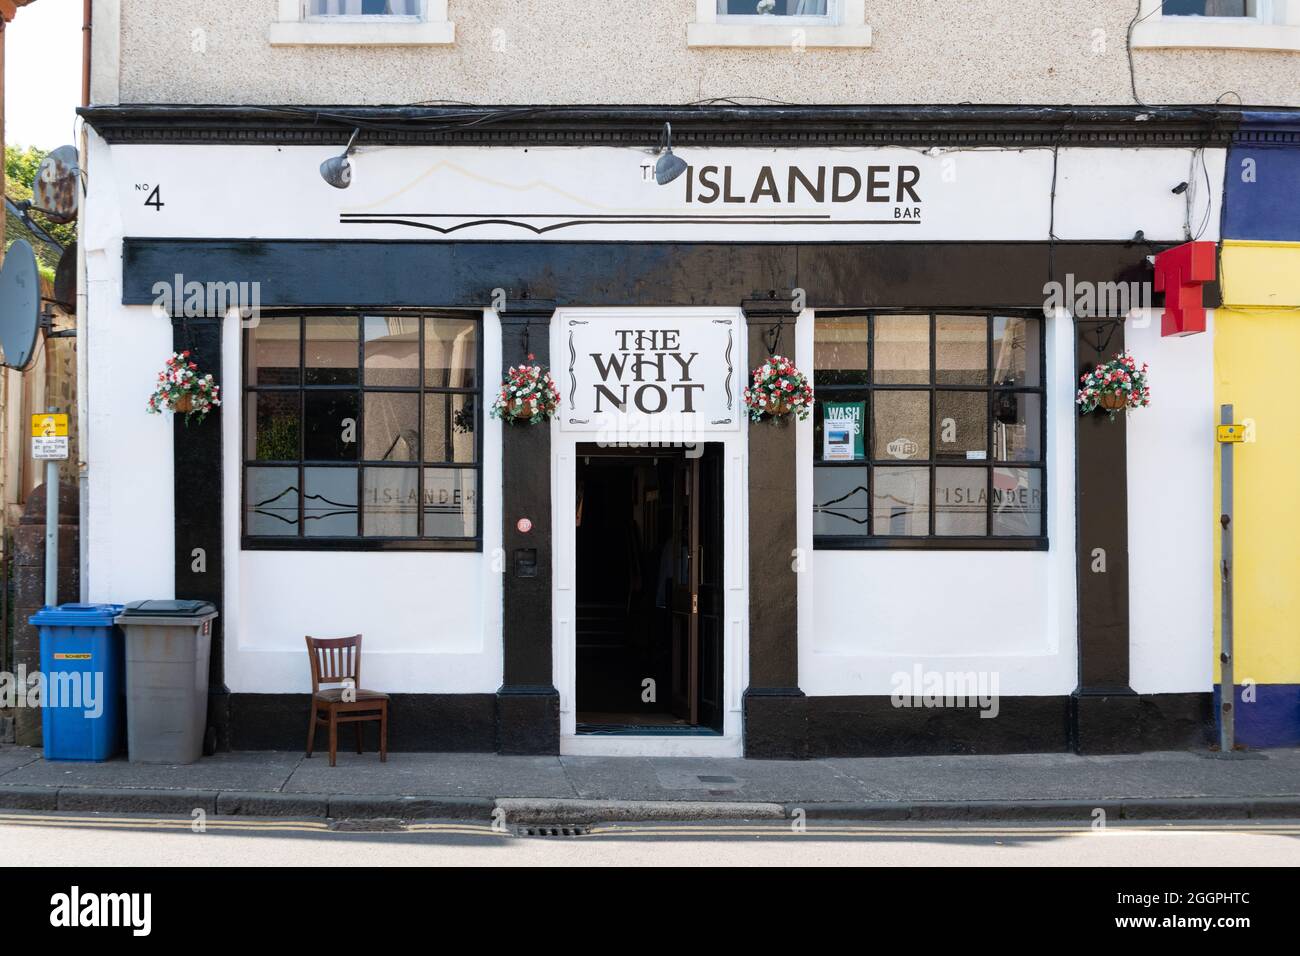 The Islander Pub Bar, Rothesay, Isle of Bute, Schottland, Großbritannien Stockfoto